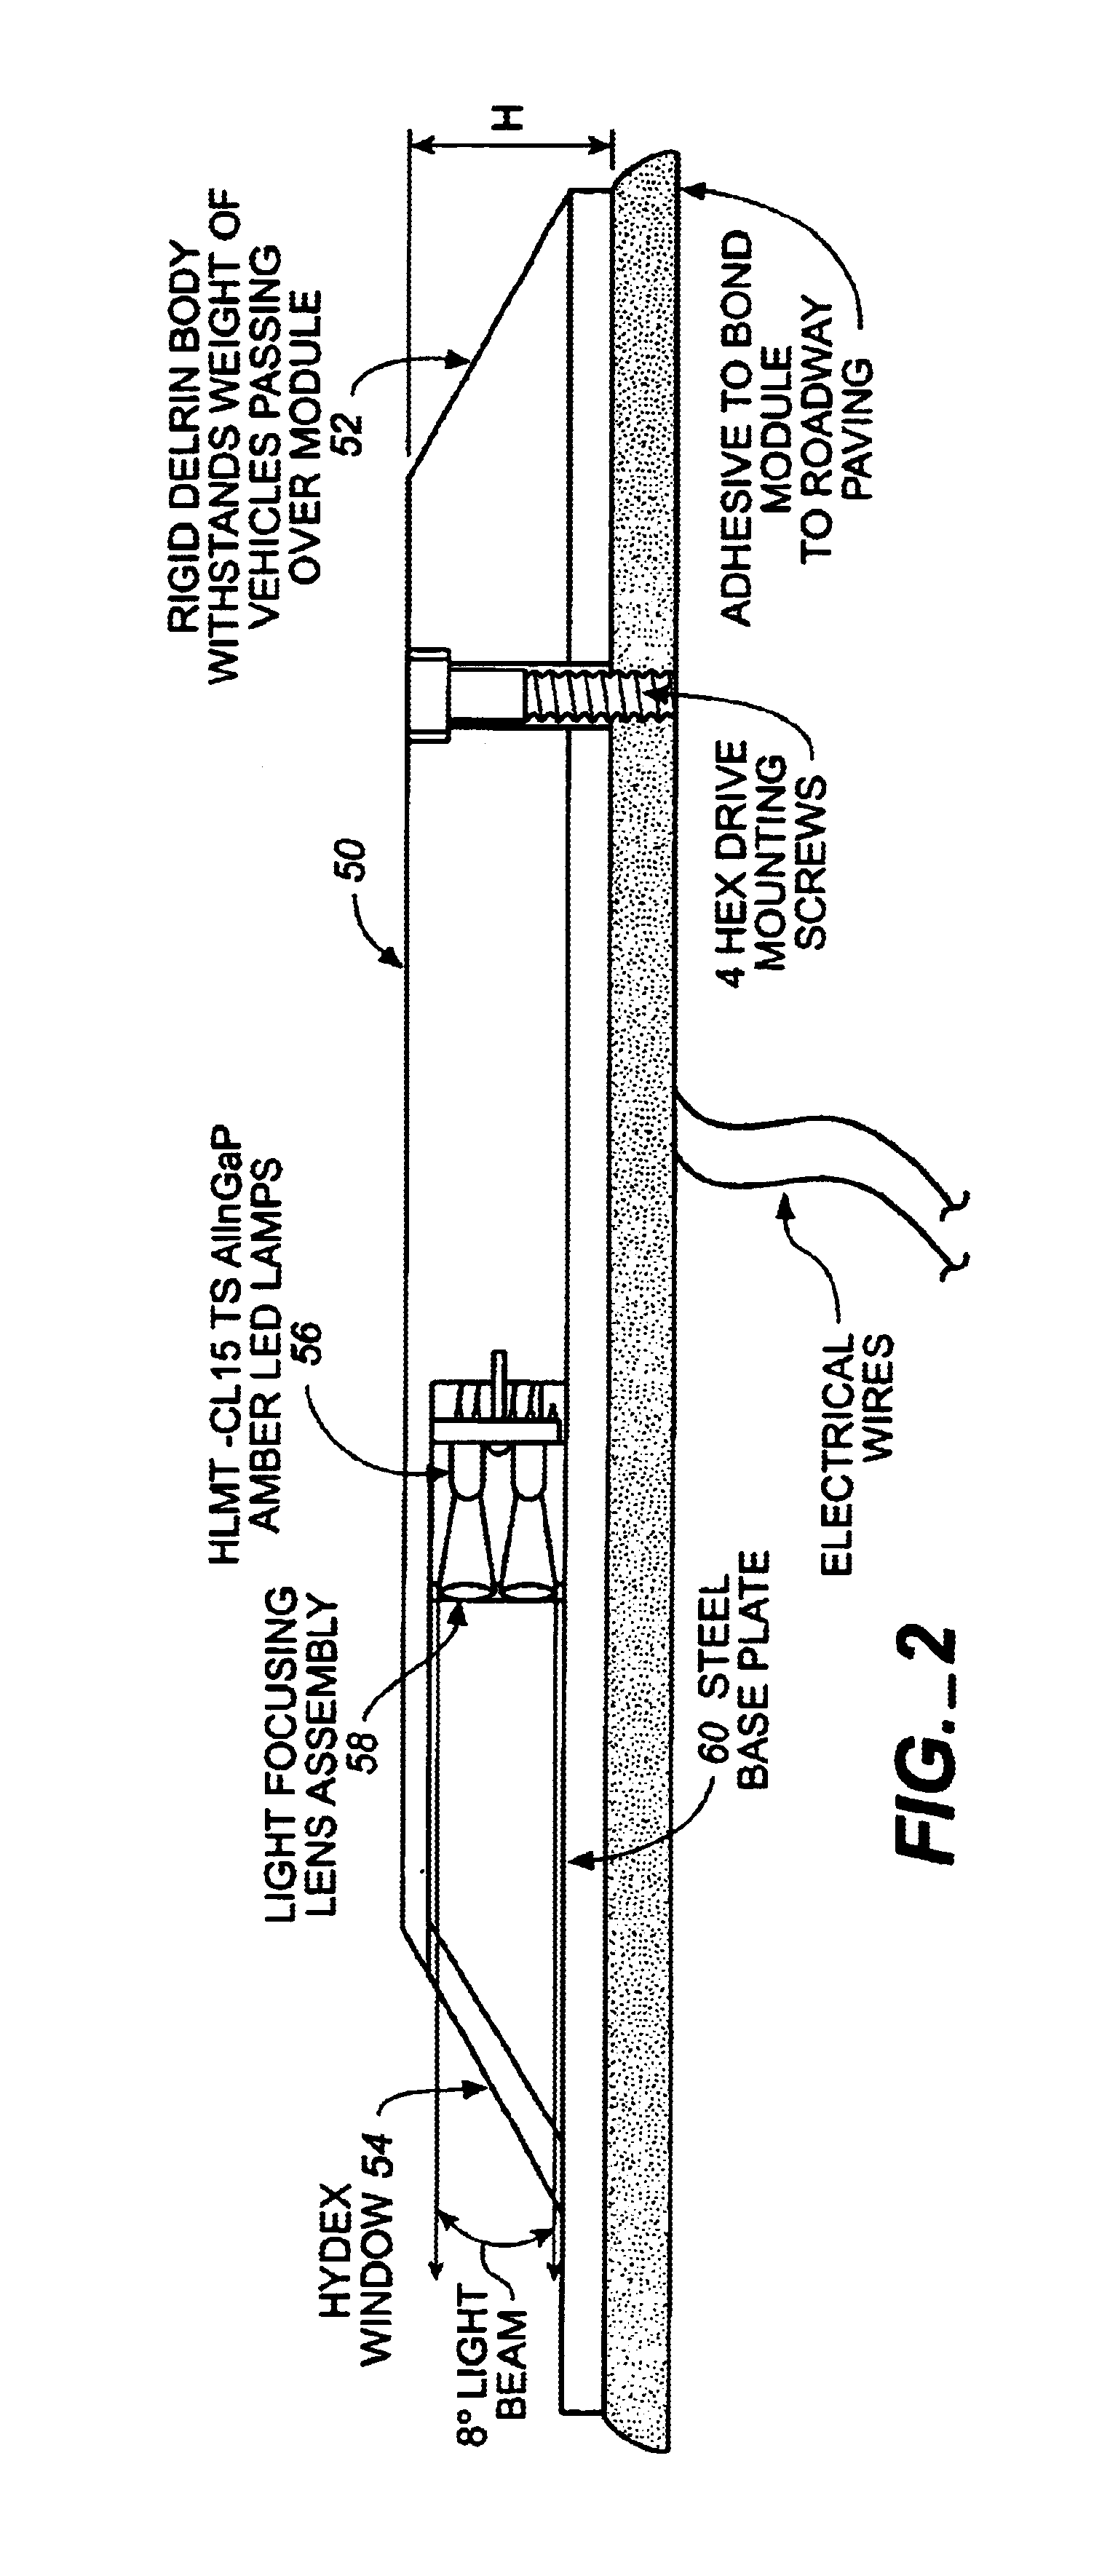 Railroad crossing signal apparatus